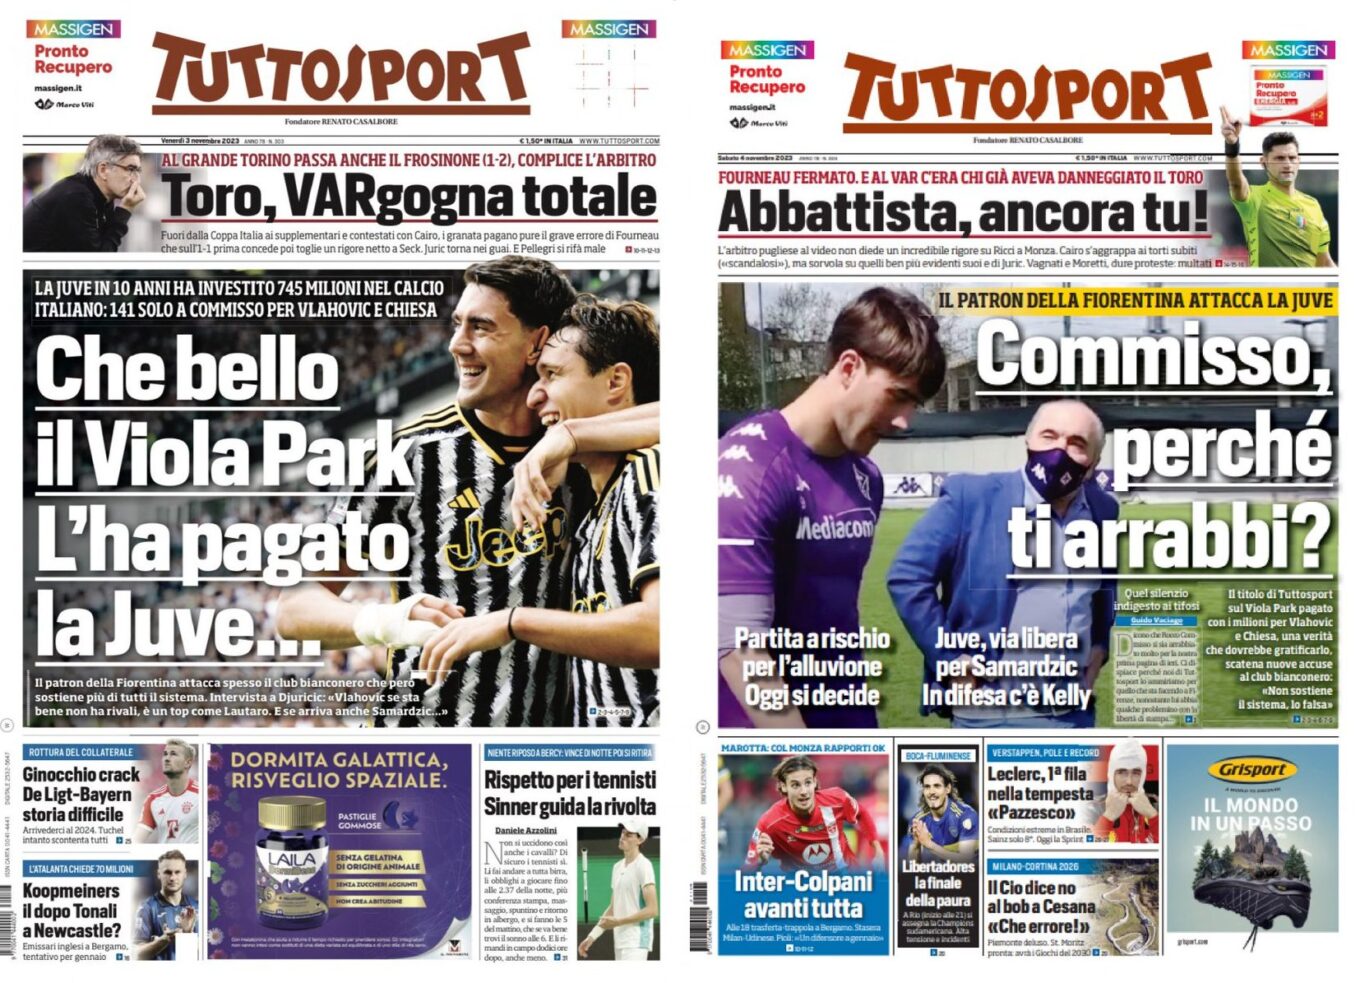 Spiecie Na Linii Tuttosport Fiorentina Commisso Dlaczego Sie Zloscisz